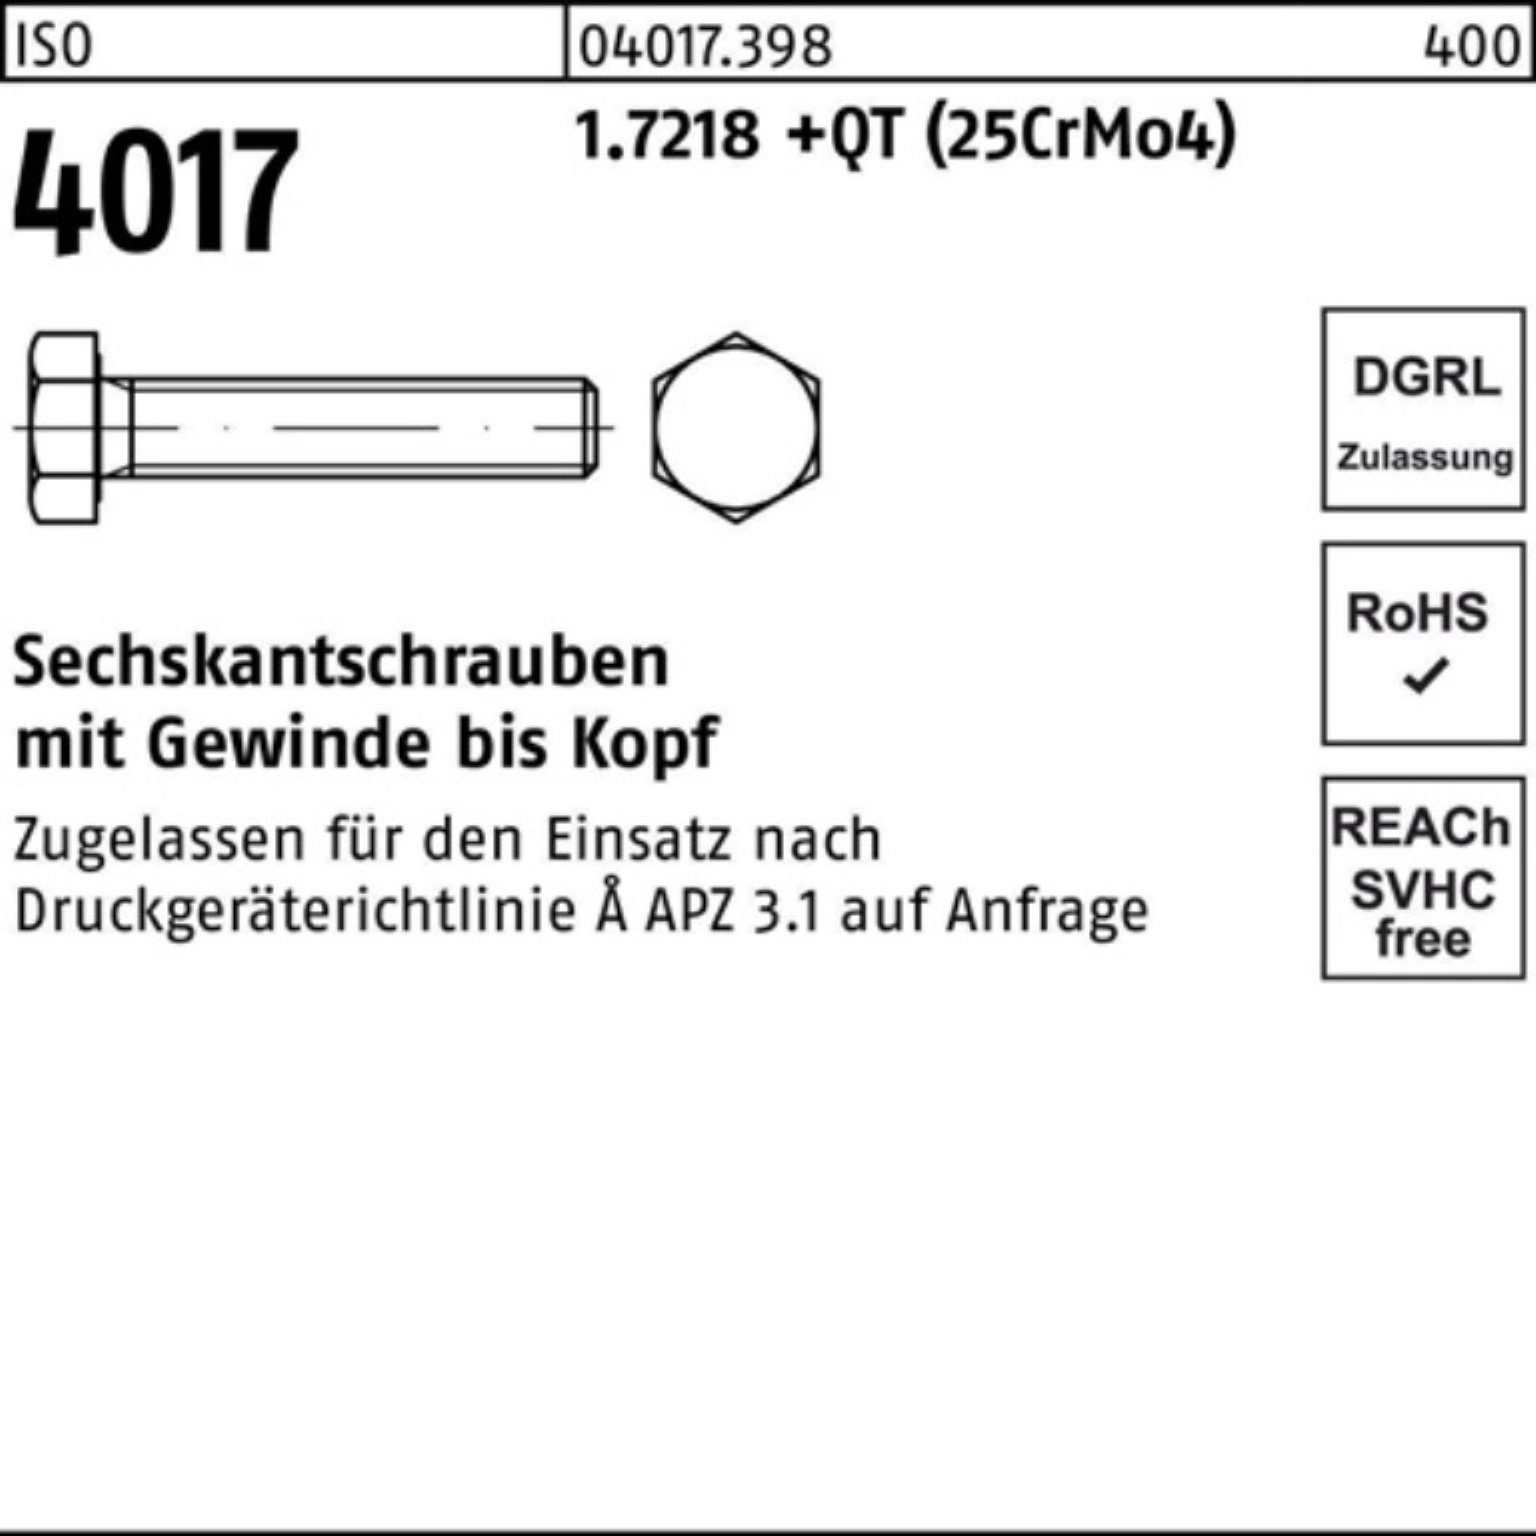 Bufab Sechskantschraube 100er ISO M20x +QT (25CrMo4) Sechskantschraube Pack 4017 VG 45 1.7218